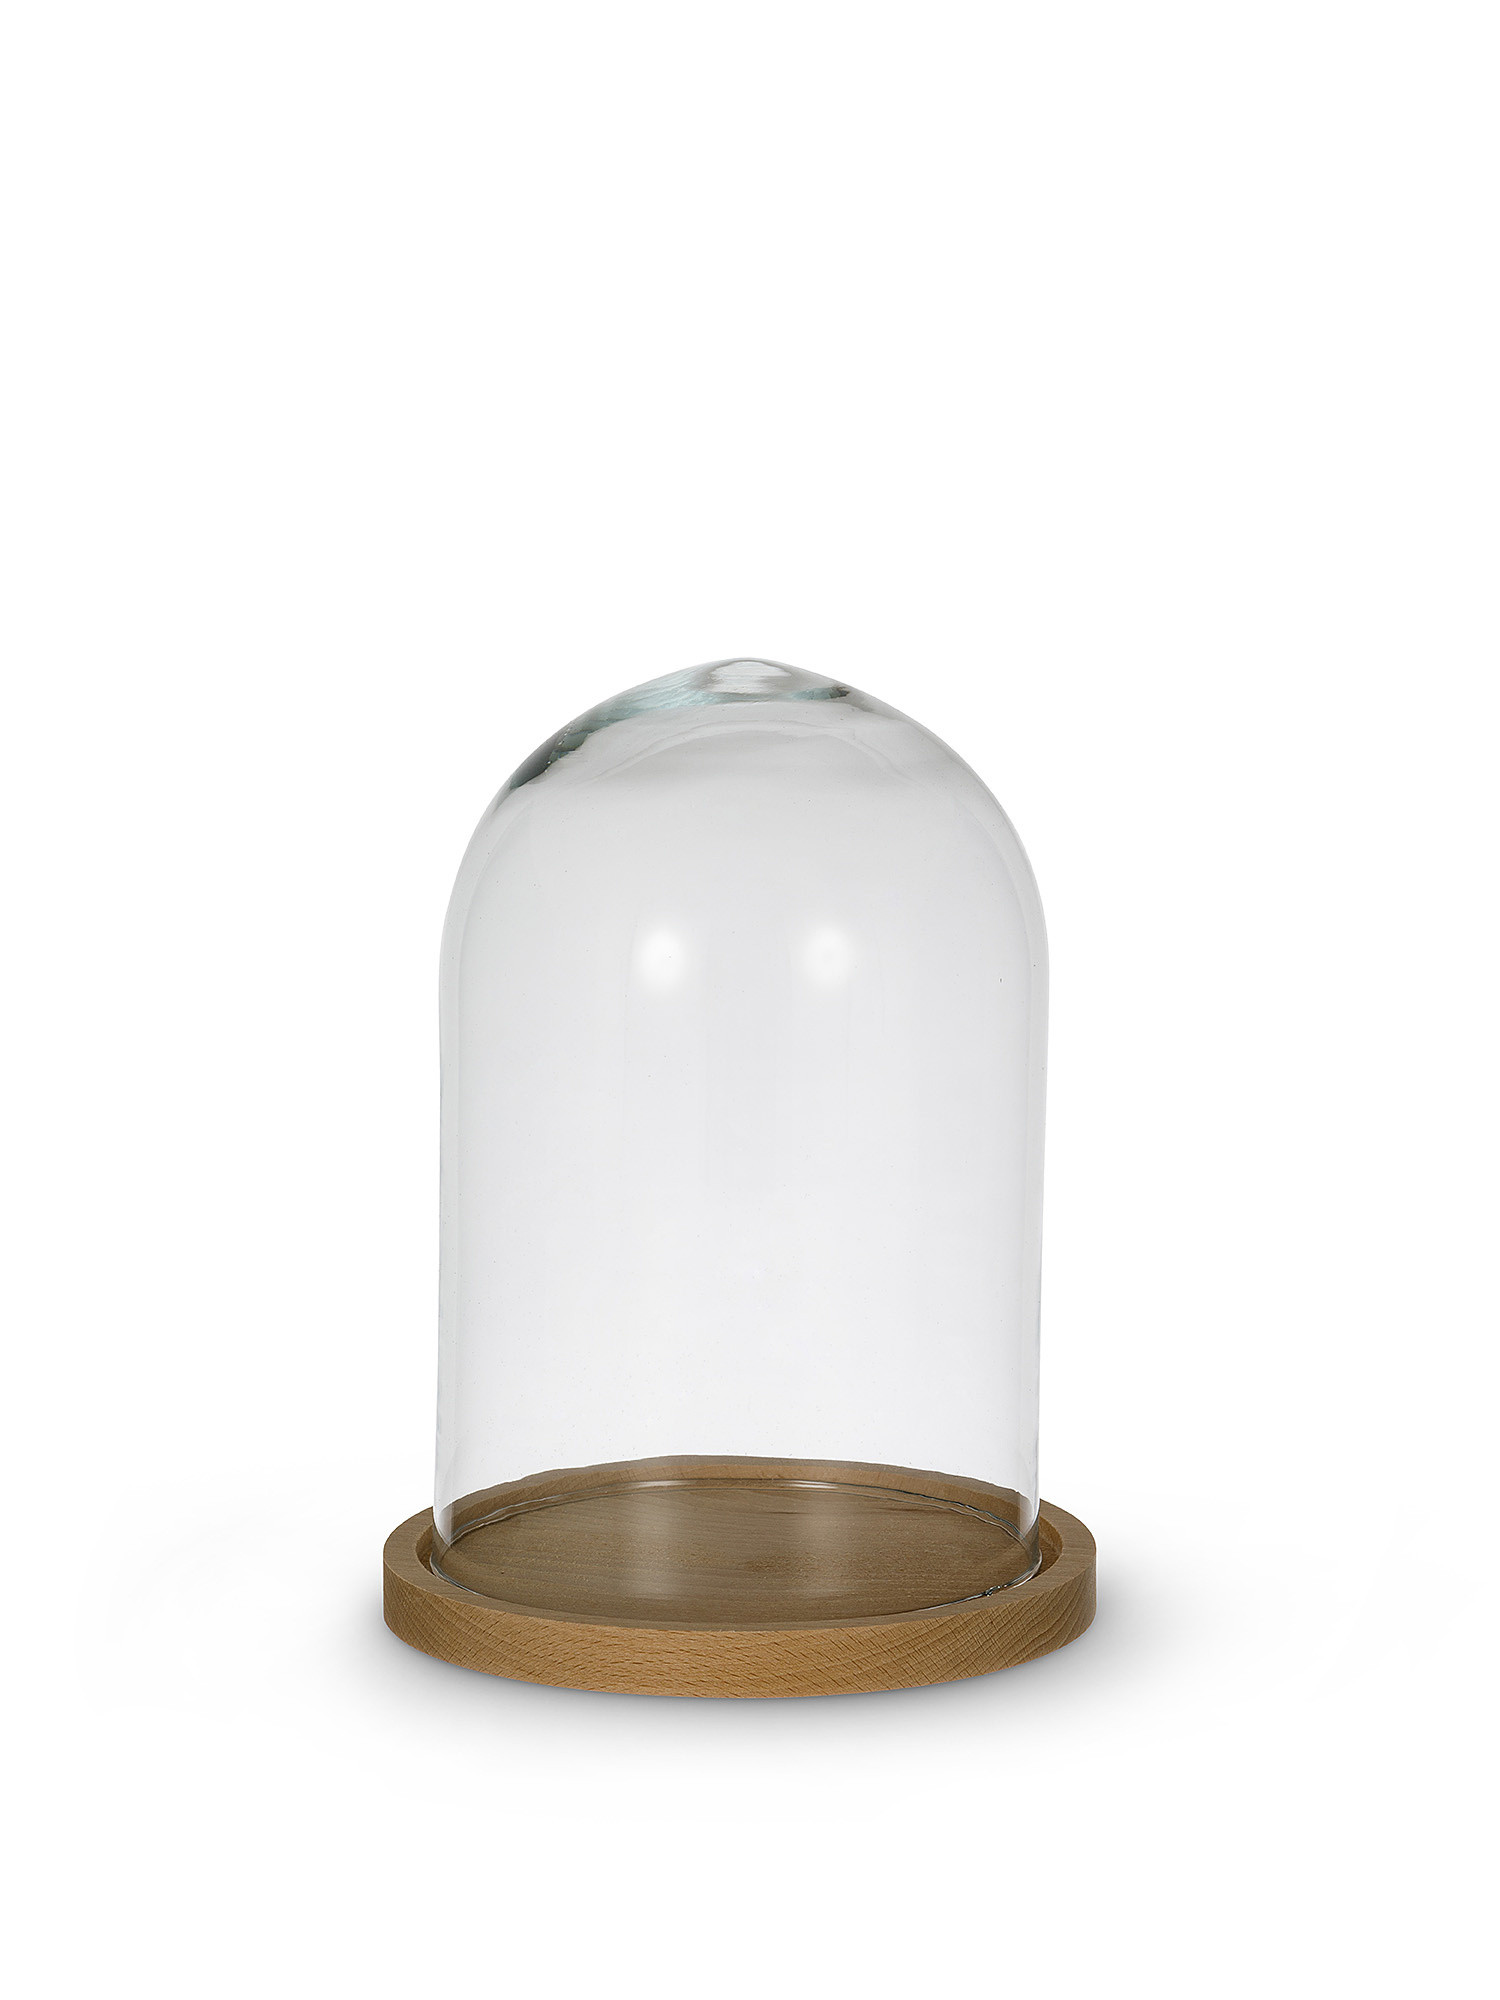 Cupola vetro base in legno, Trasparente, large image number 0